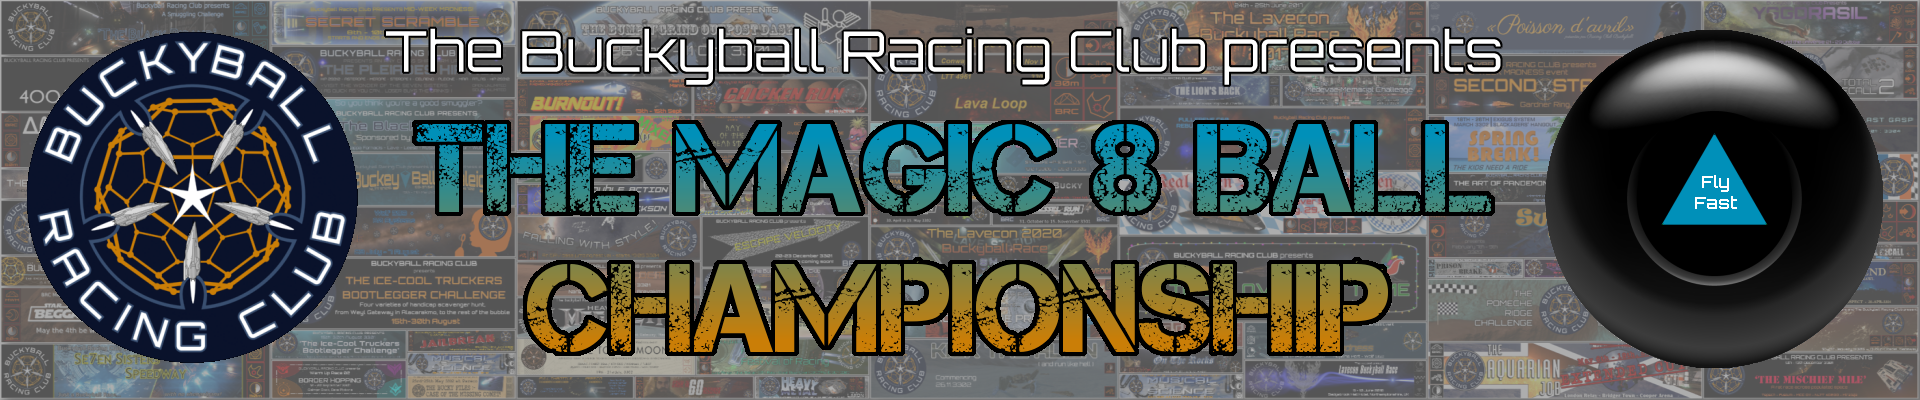 The Magic 8 Ball Championship